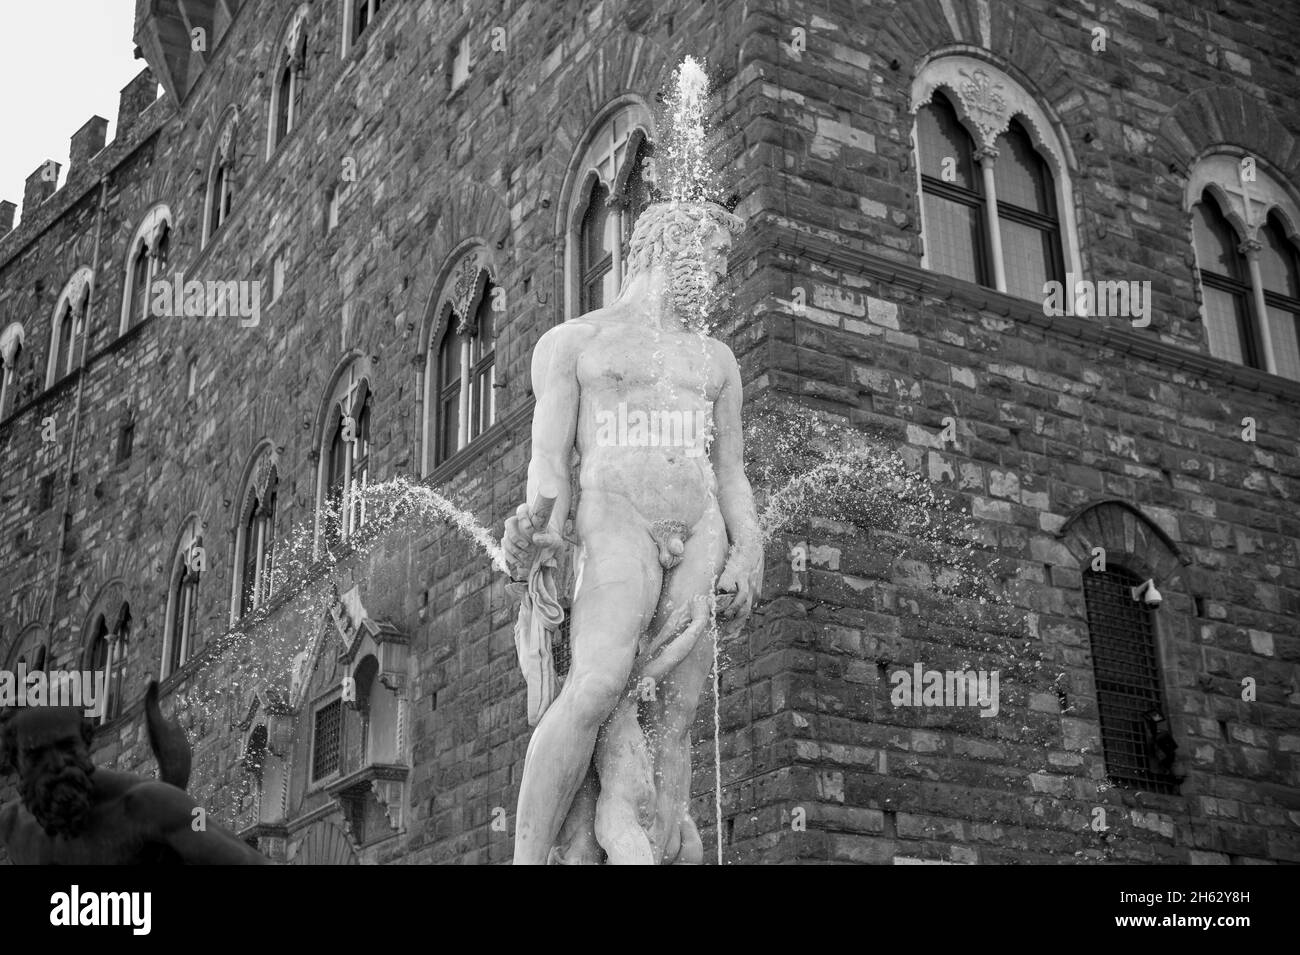 florenz, italien. Blick auf die piazza della signoria mit dem palazzo vecchio Stockfoto